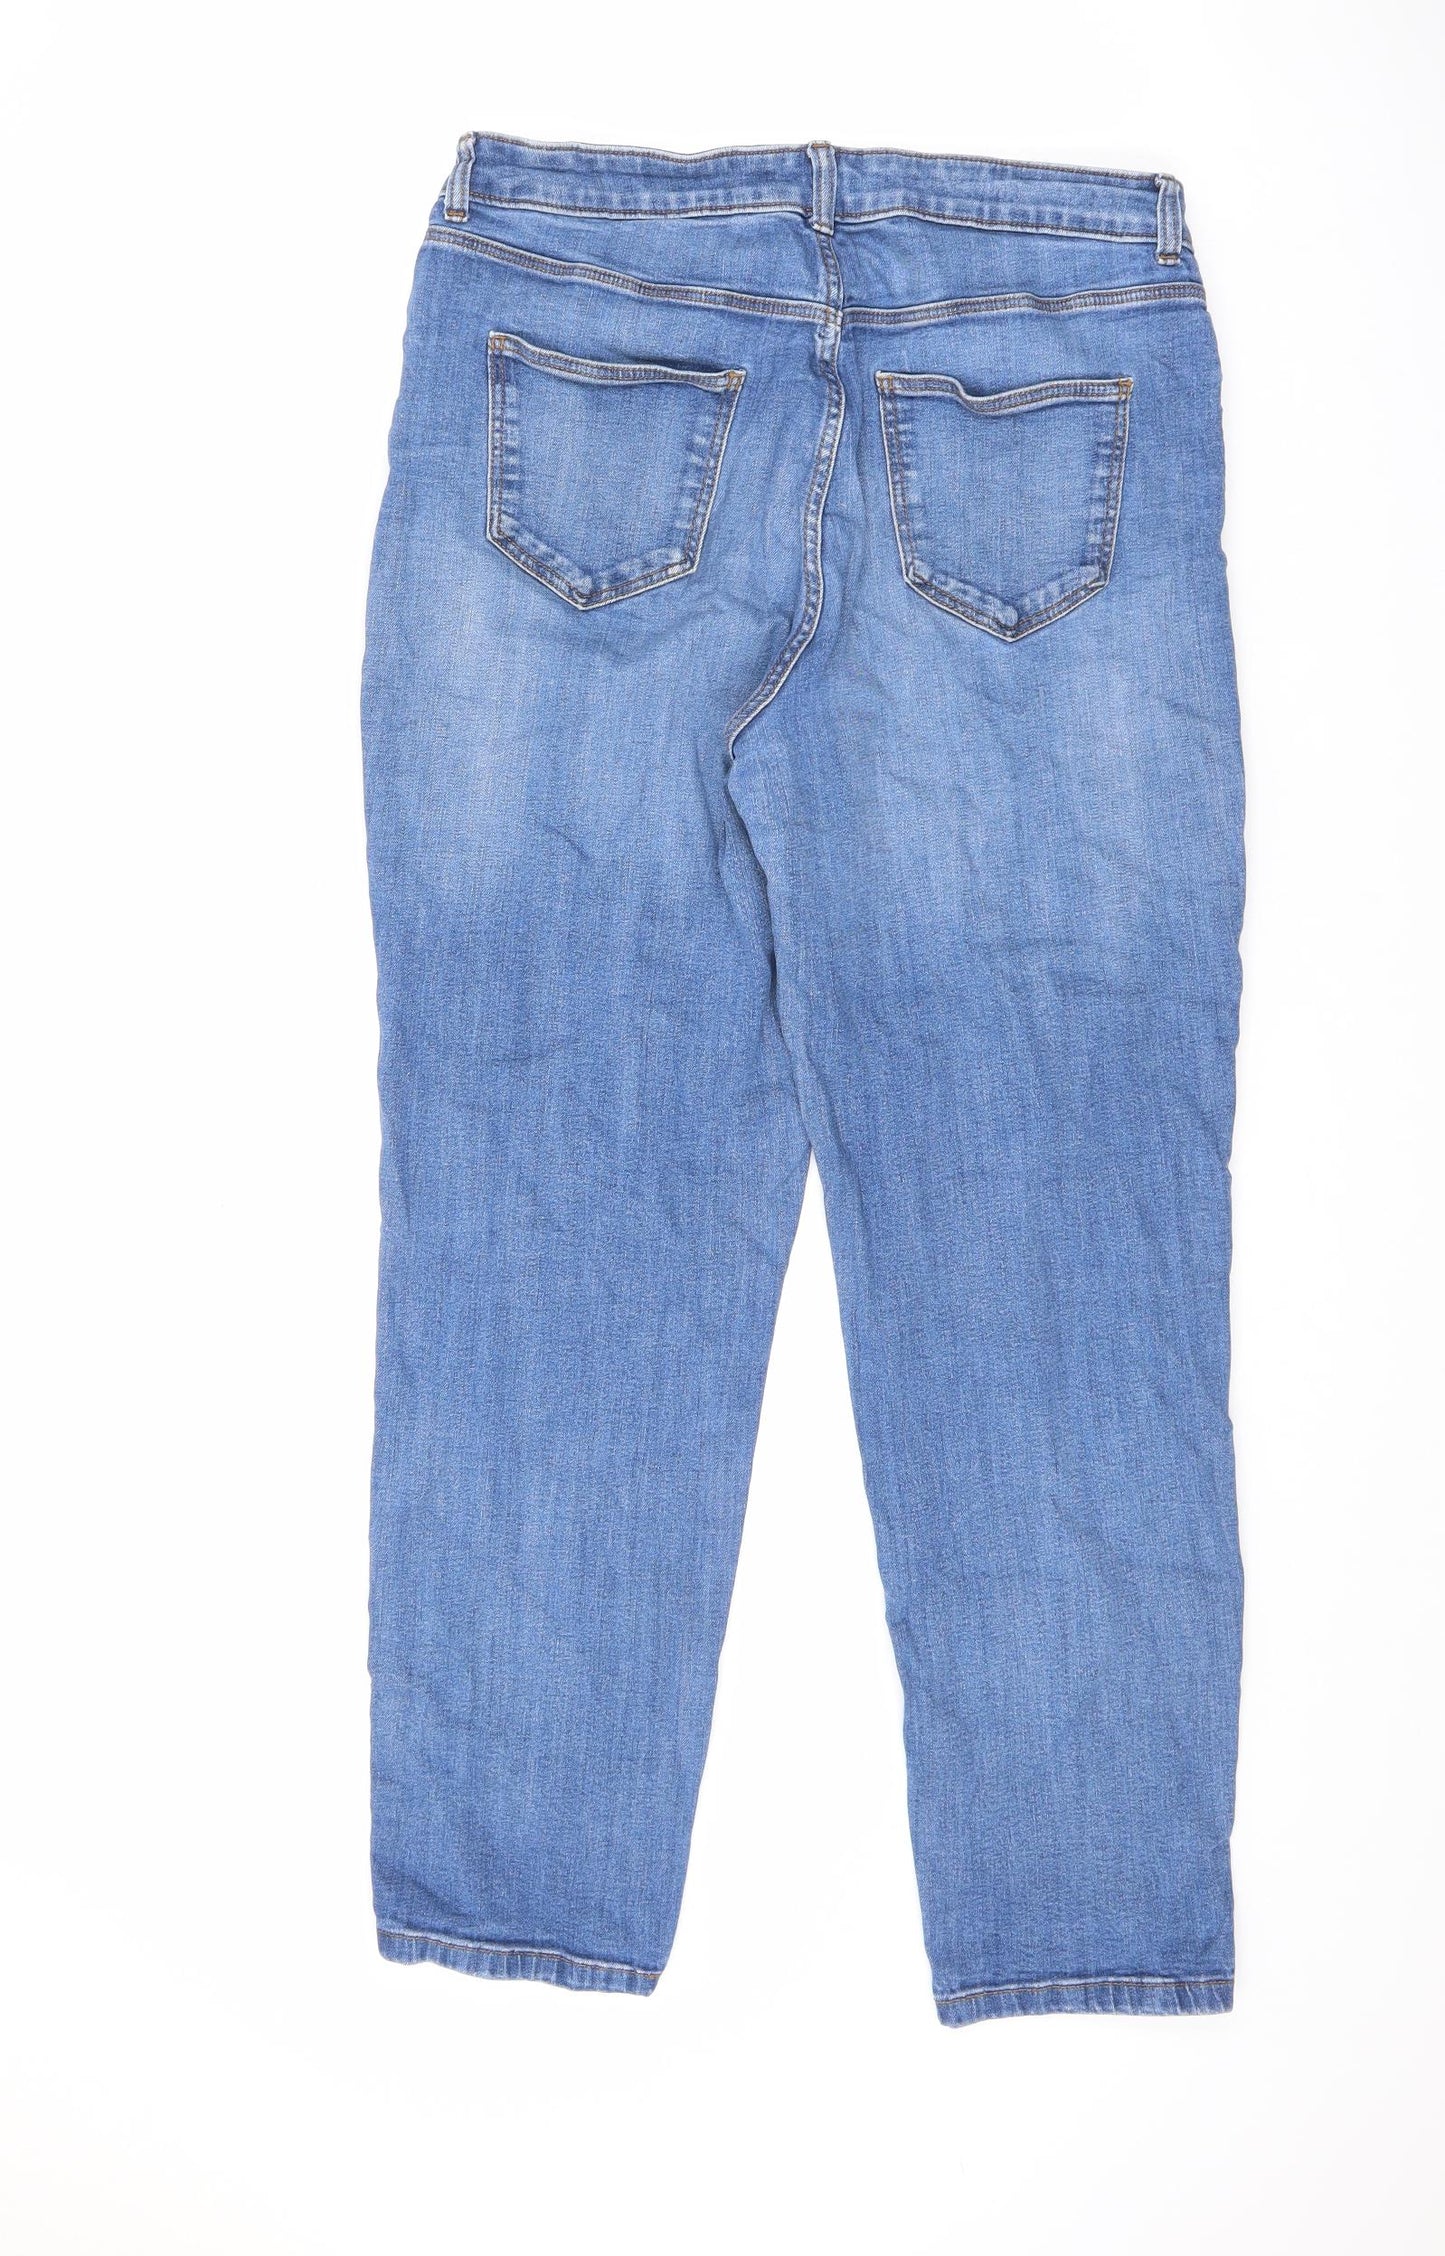 TU Womens Blue Cotton Boyfriend Jeans Size 14 L28.5 in Regular Zip